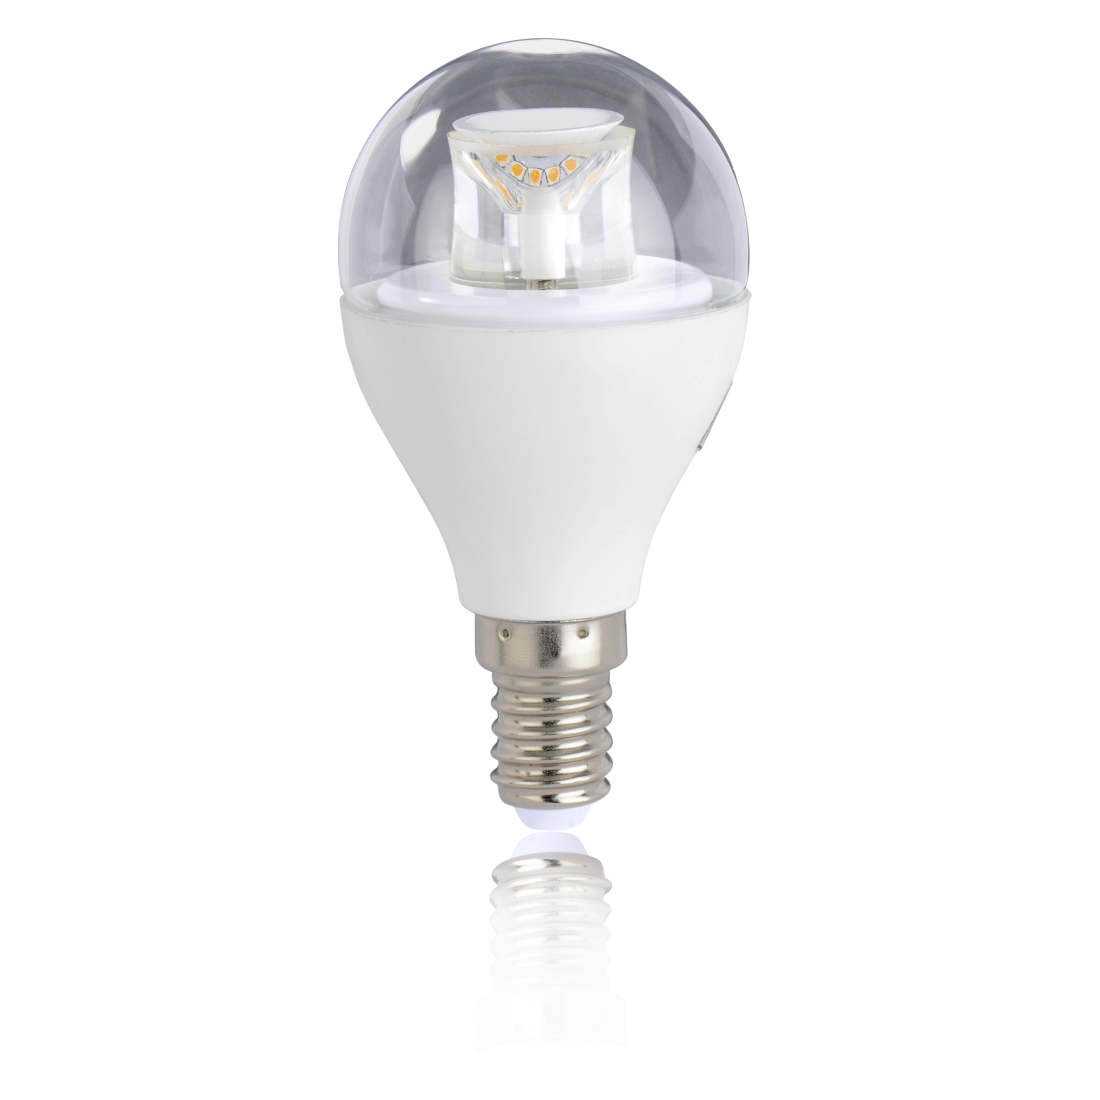 abx2 Druckfähige Abbildung 2 - Xavax, LED-Lampe, E14, 470lm ersetzt 40W, Tropfenlampe, Warmweiß, dimmbar